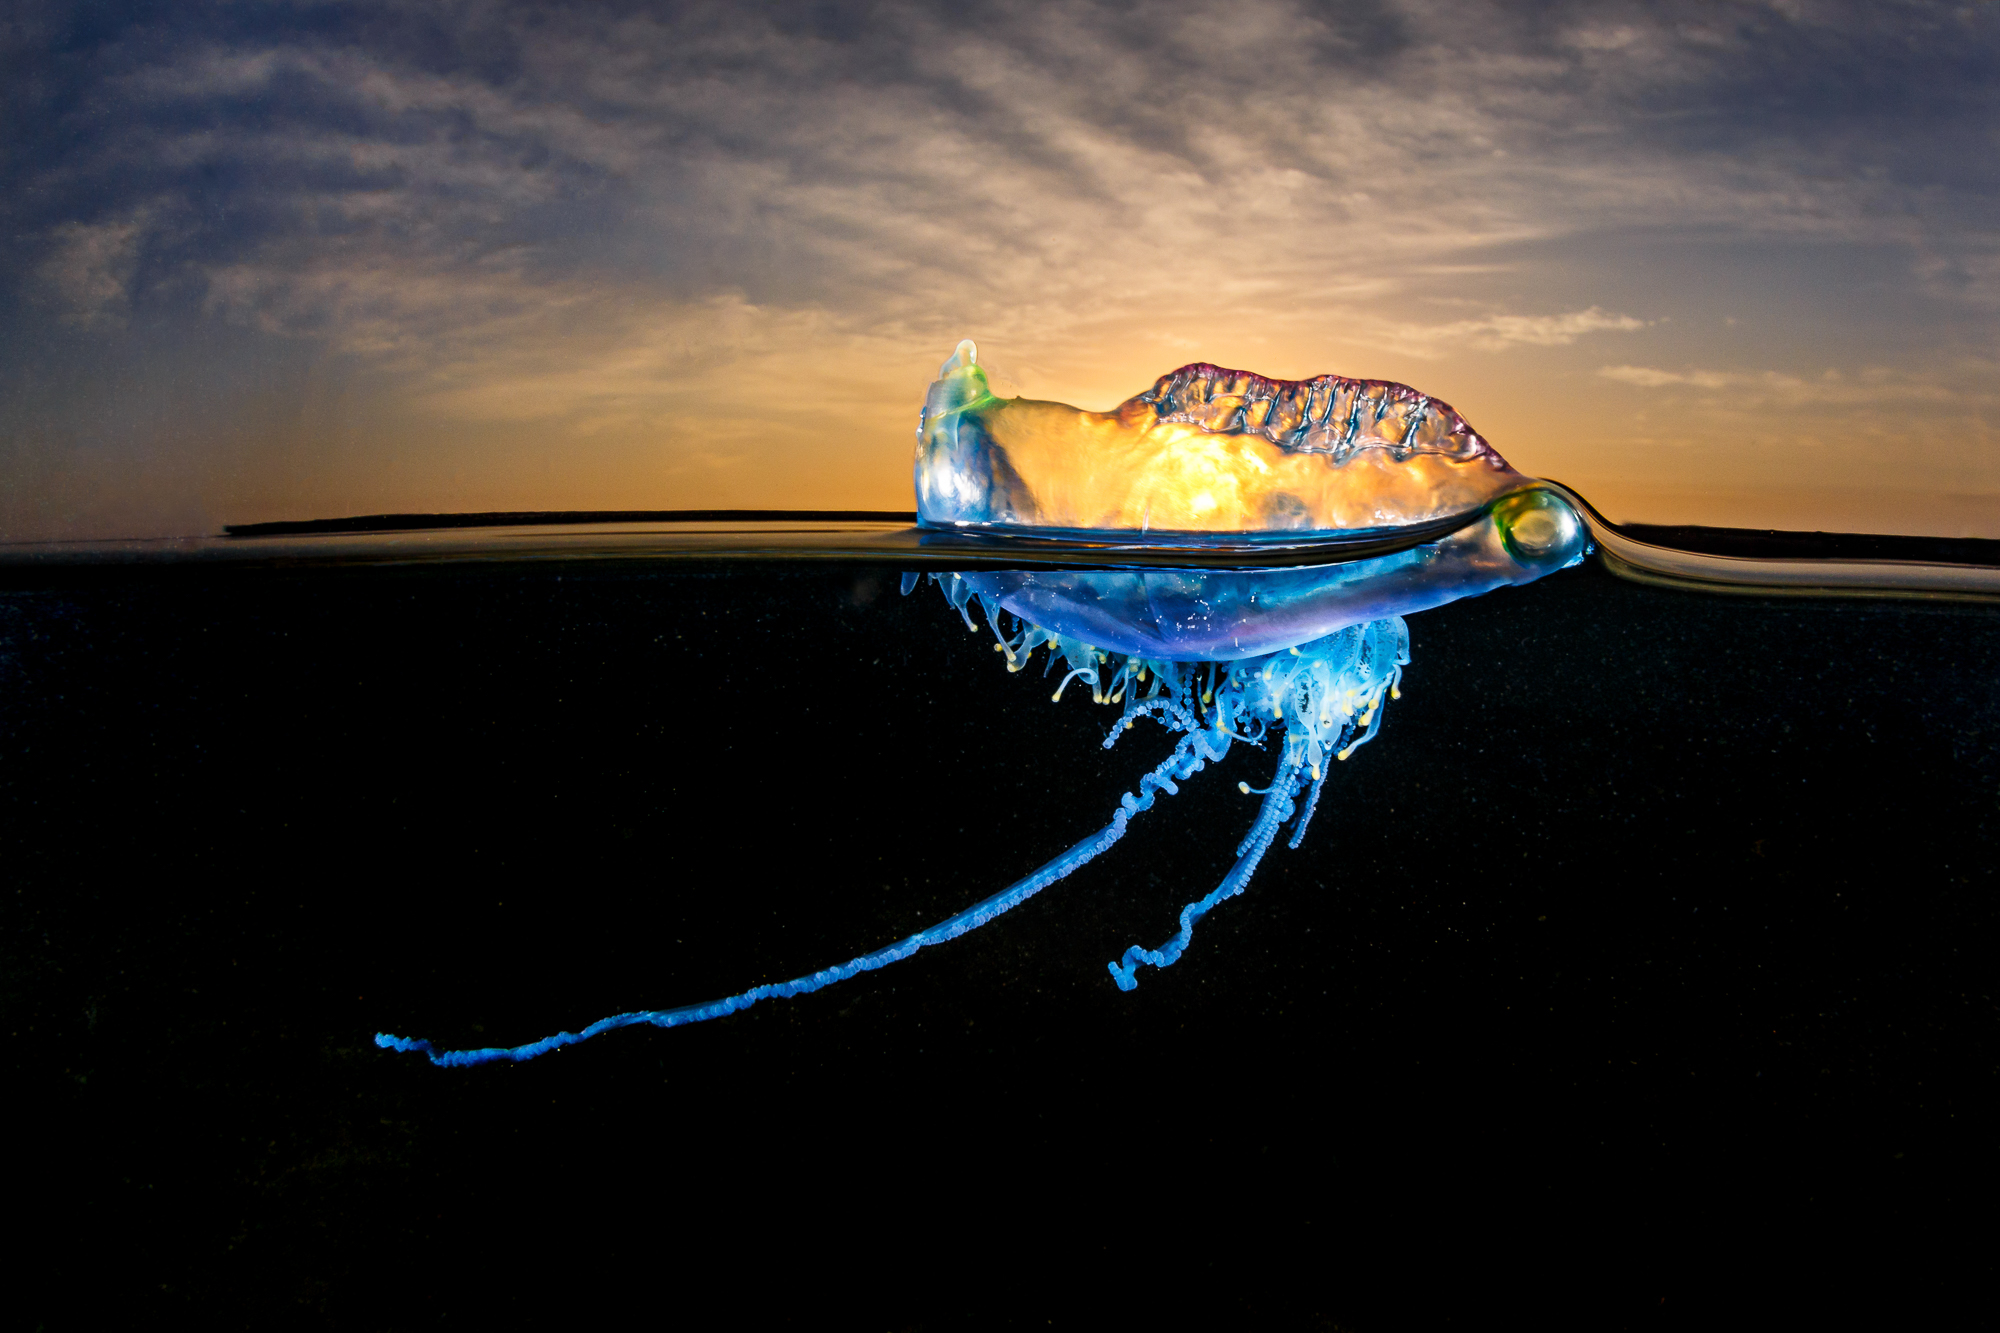 A bluebottle jellyfish